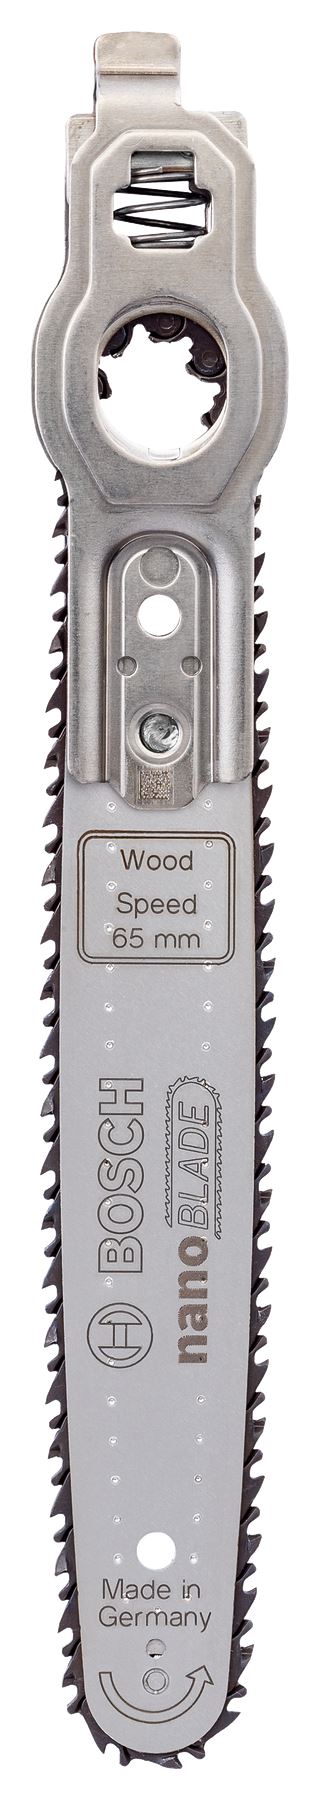 BOSCH nanoBLADE Wood Speed 650 